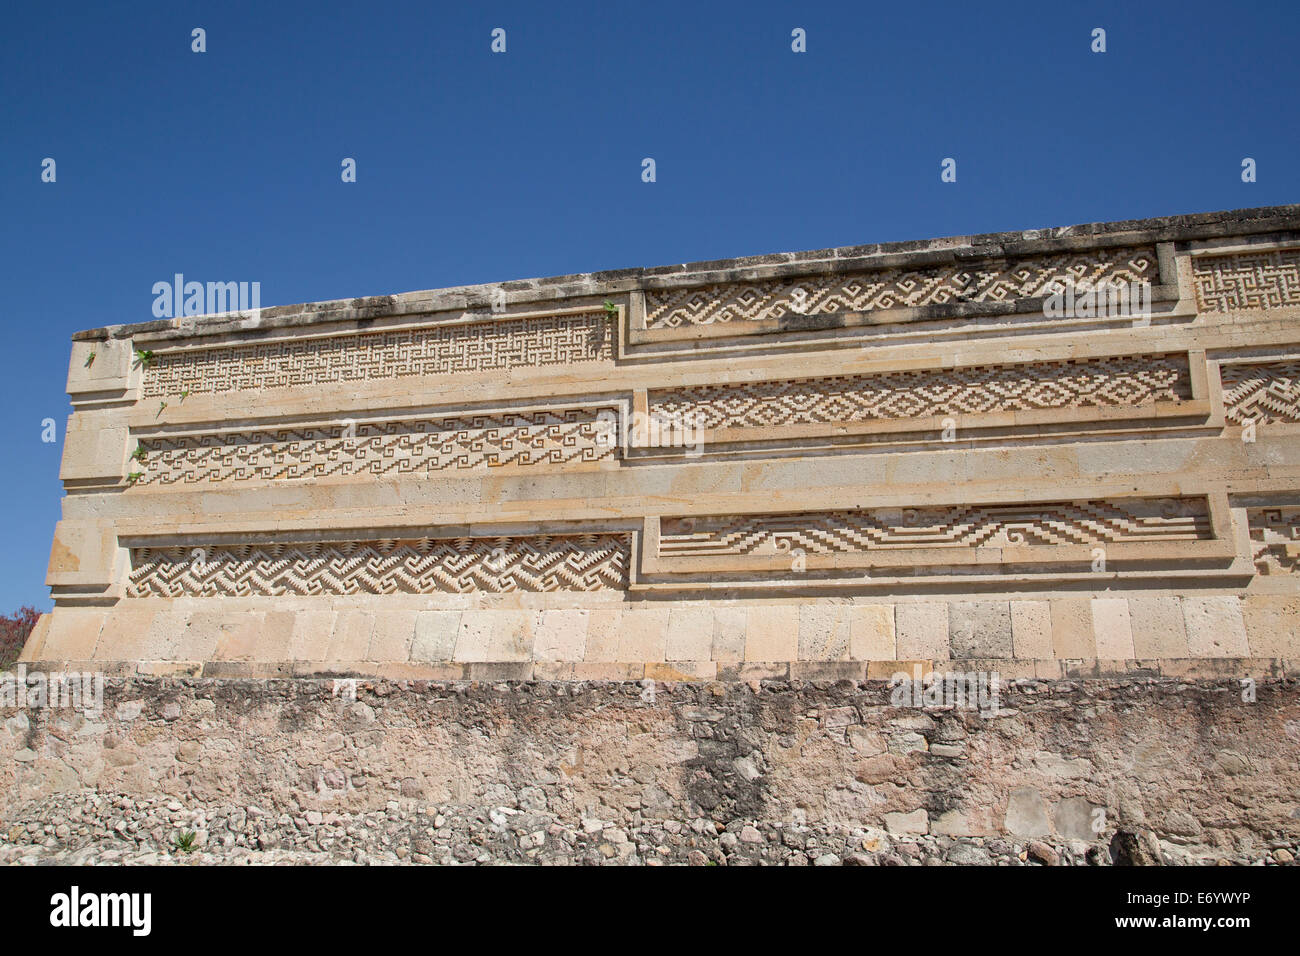 Mexico, Oaxaca, San Pablo de Mitla, Mitla Archaeological Site, walls of mosaic fretwork and geometric designs Stock Photo